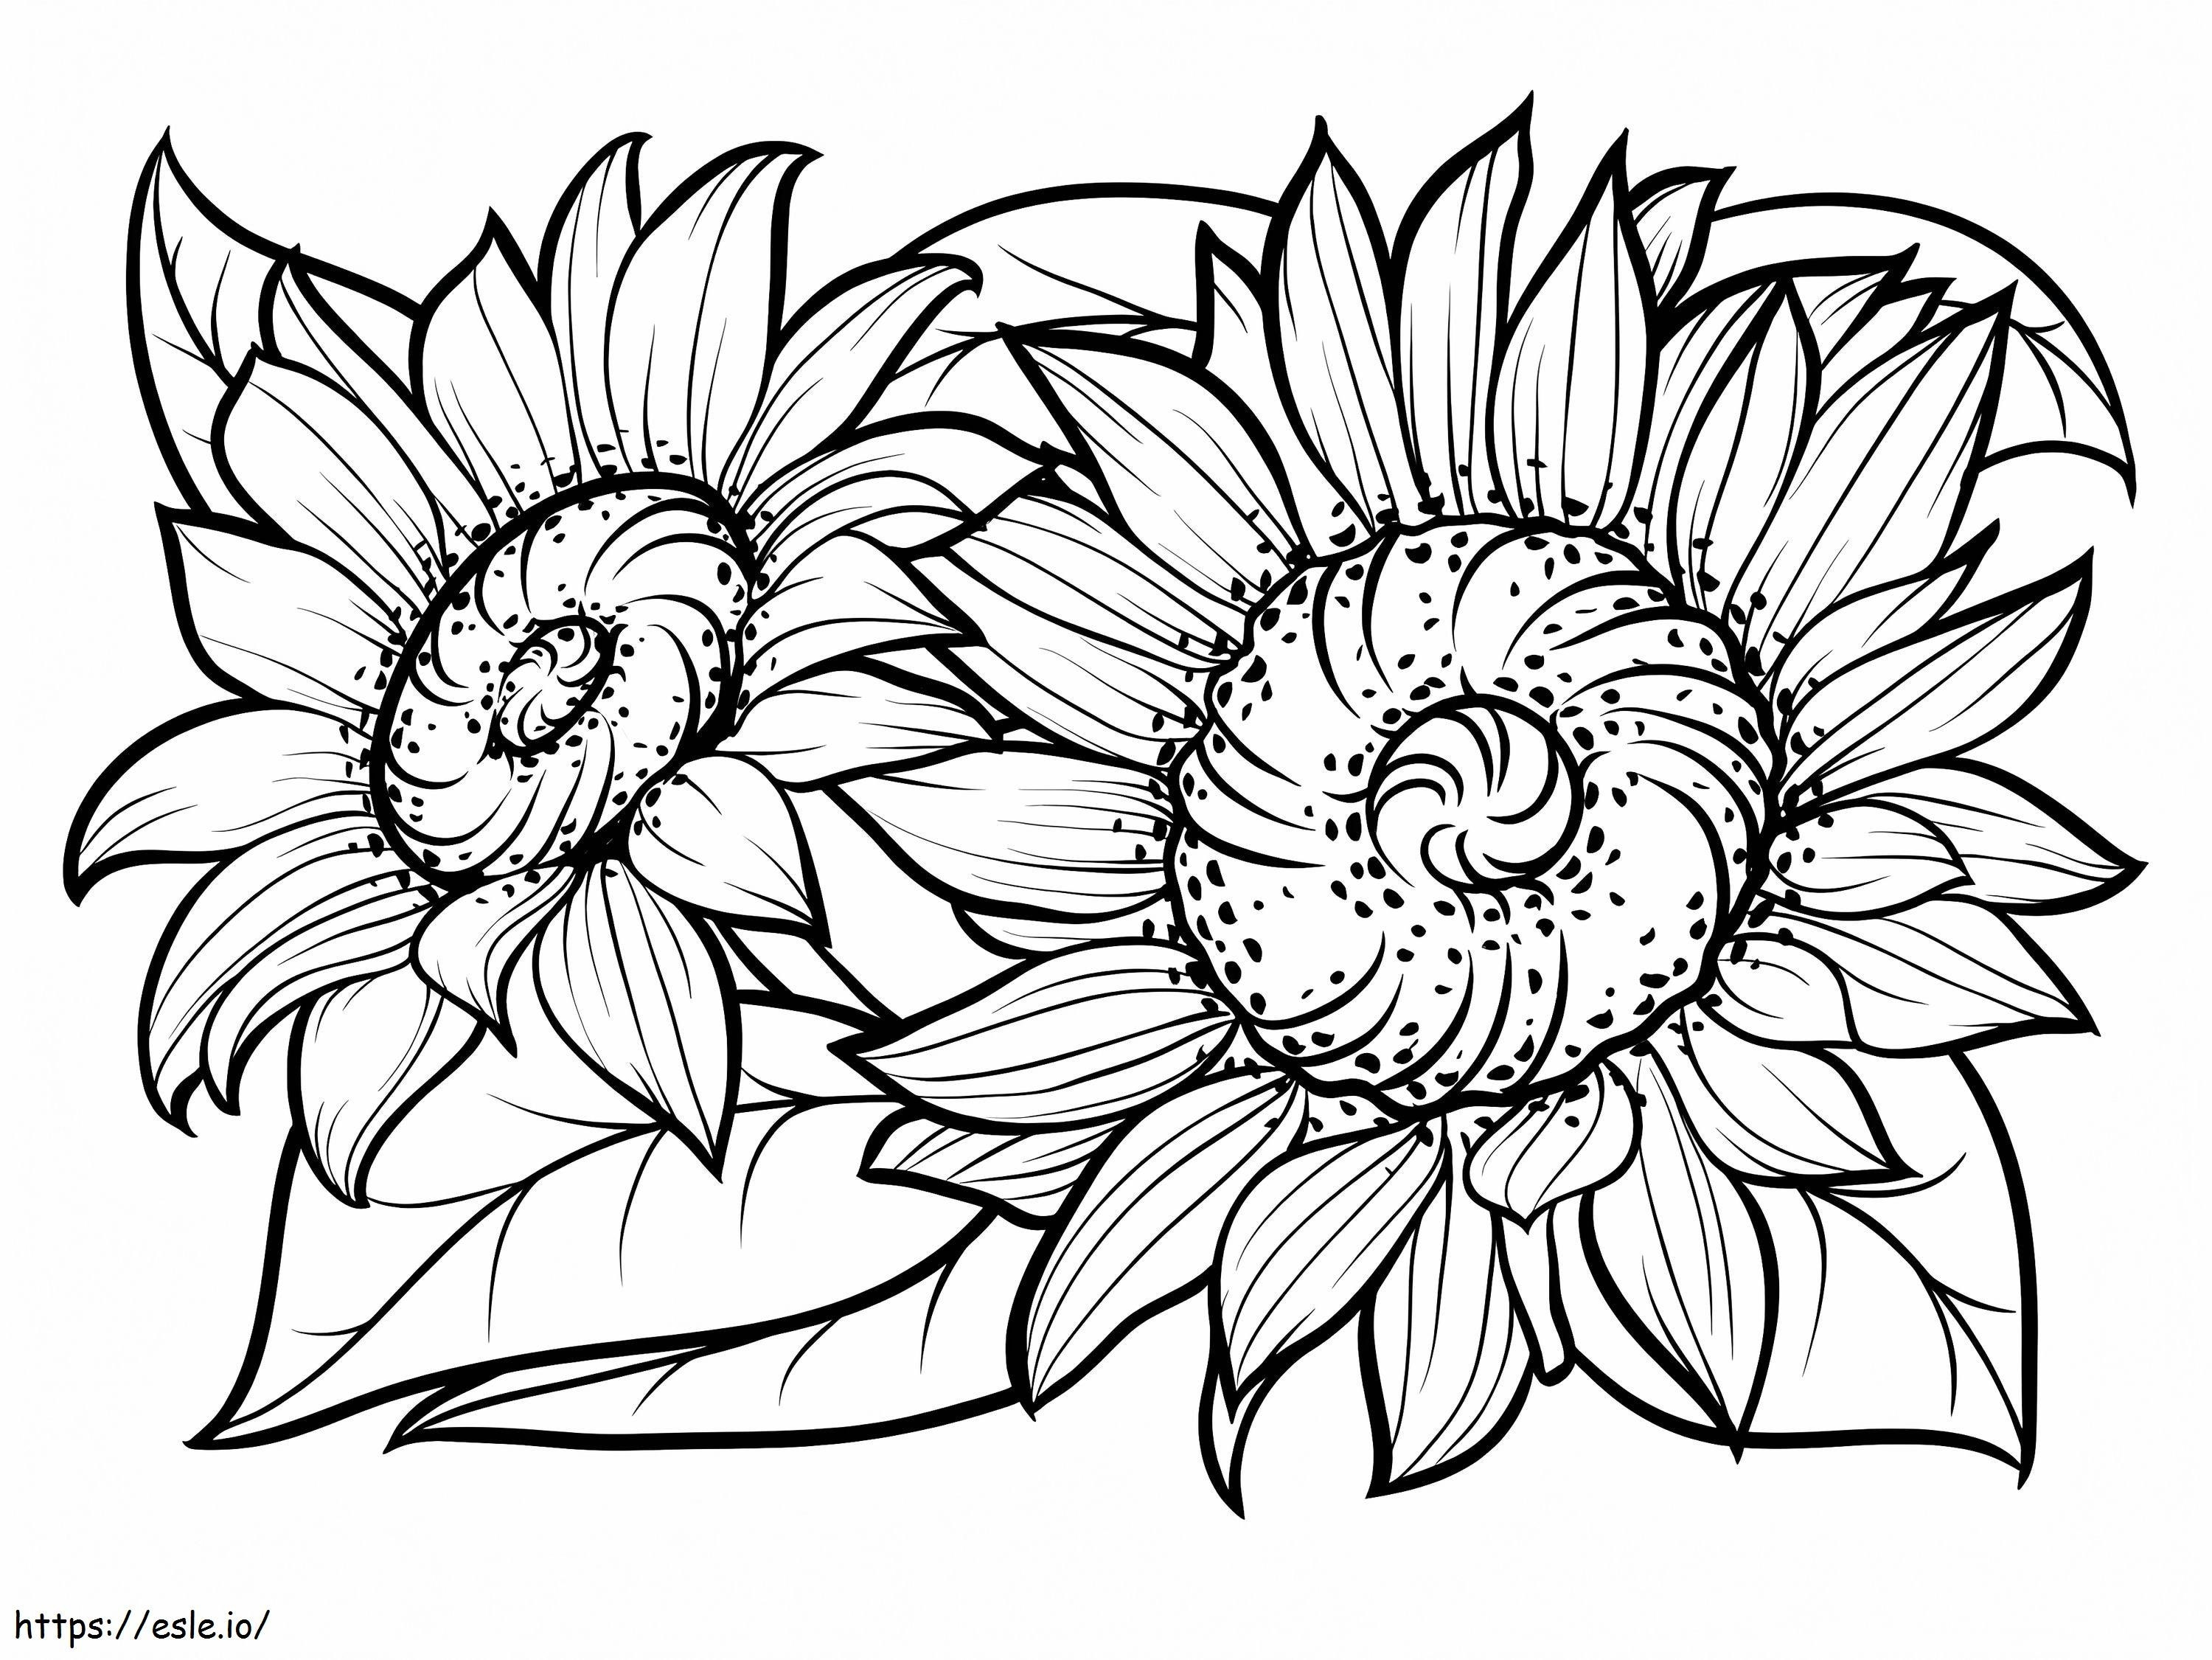 Druckbare Sonnenblumen ausmalbilder